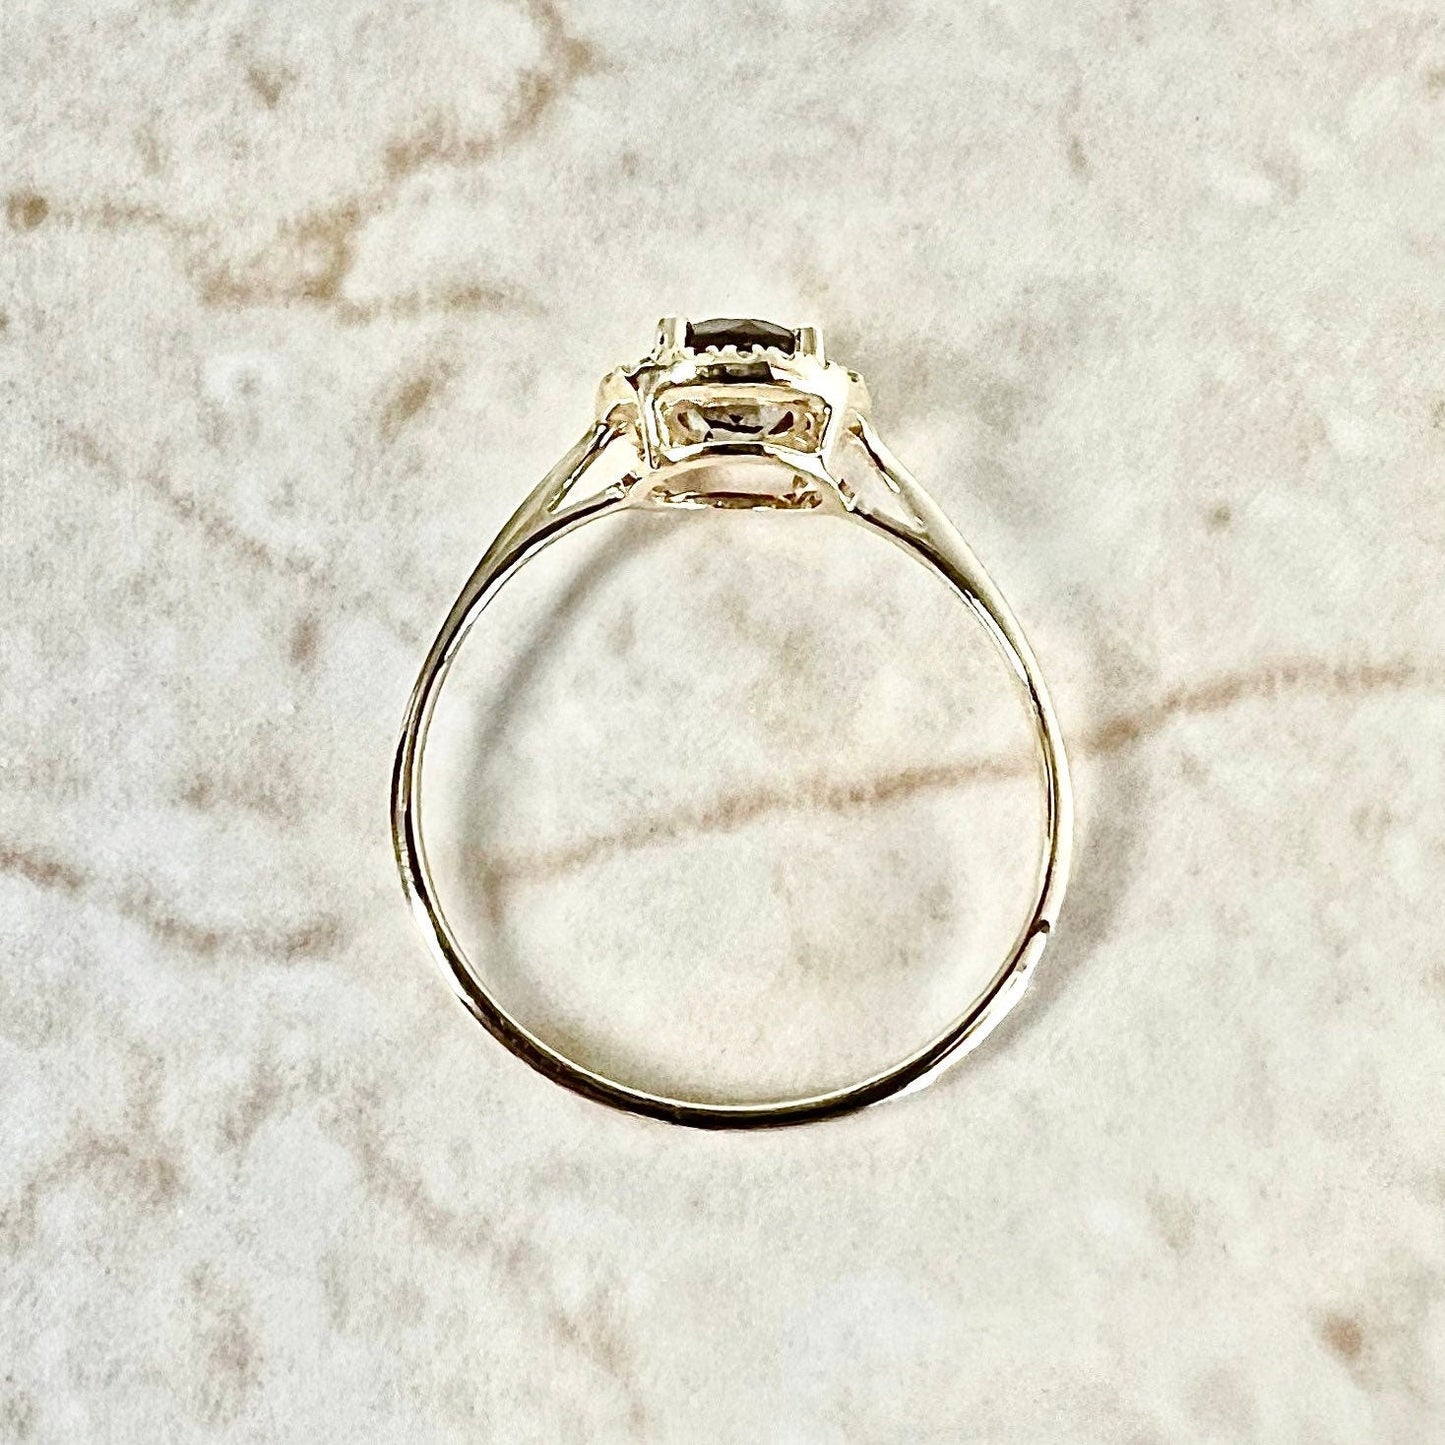 14K Round Smoky Quartz Halo Ring - Yellow Gold Smoky Quartz Ring - Gemstone Halo Ring - Smoky Quartz Promise Ring - June Birthstone Gift